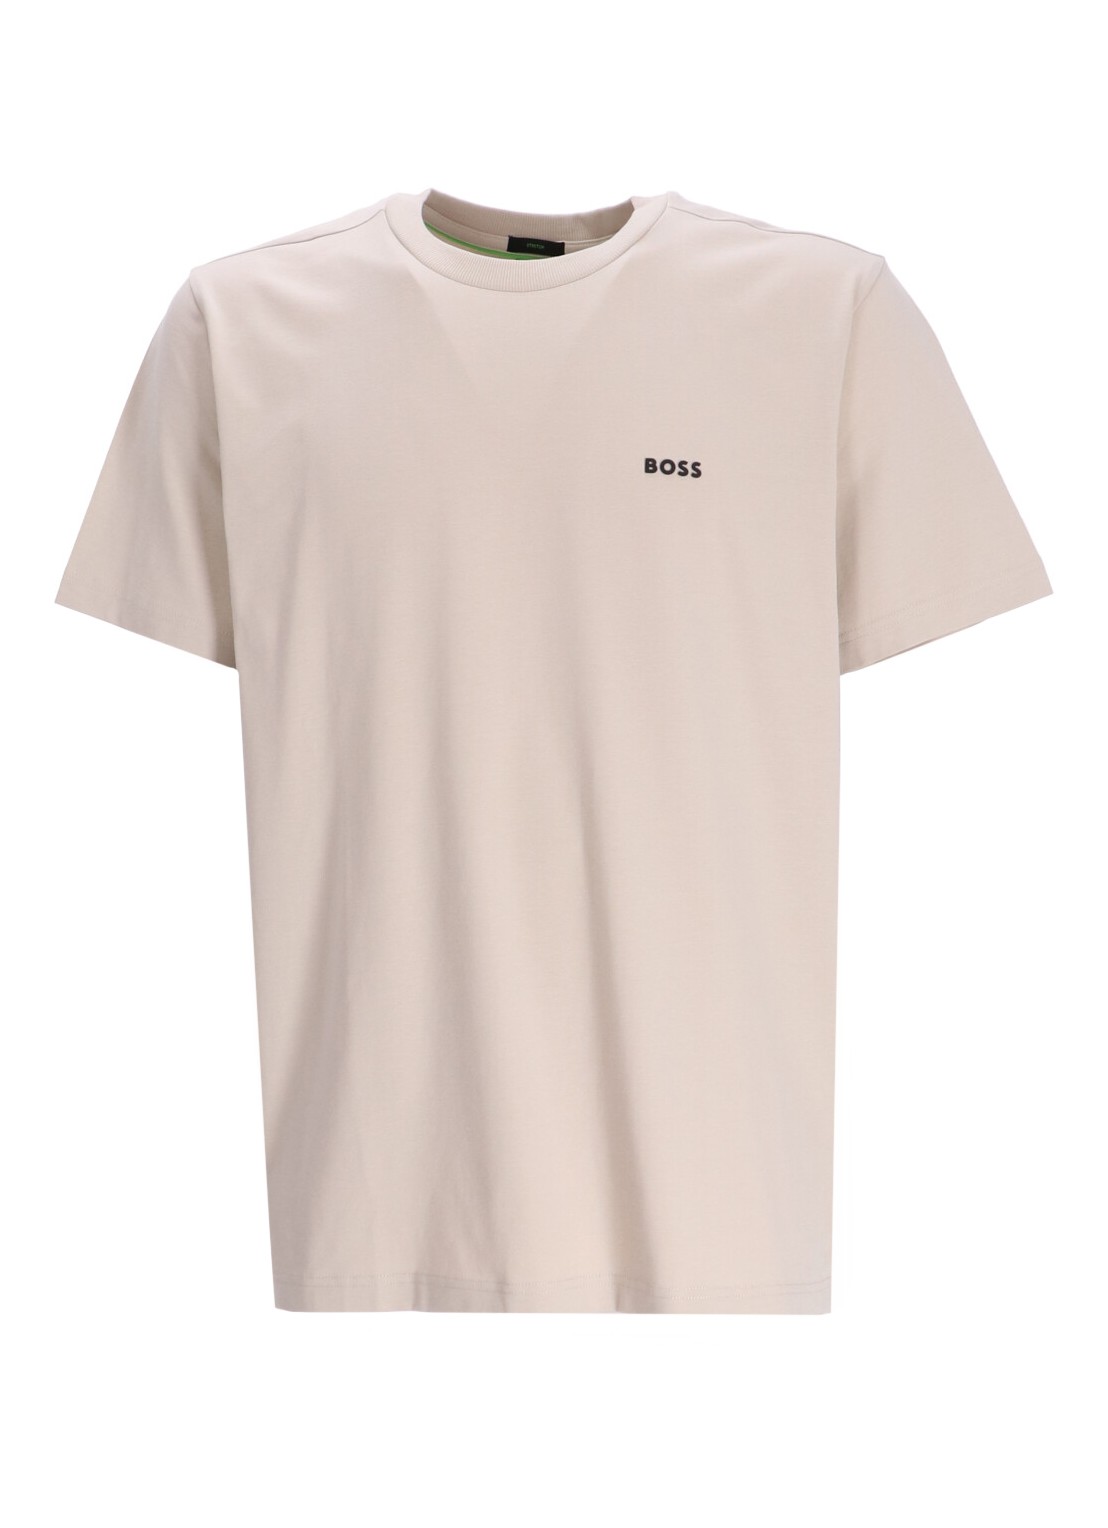 Camiseta boss t-shirt mantee - 50506373 271 talla XXL
 